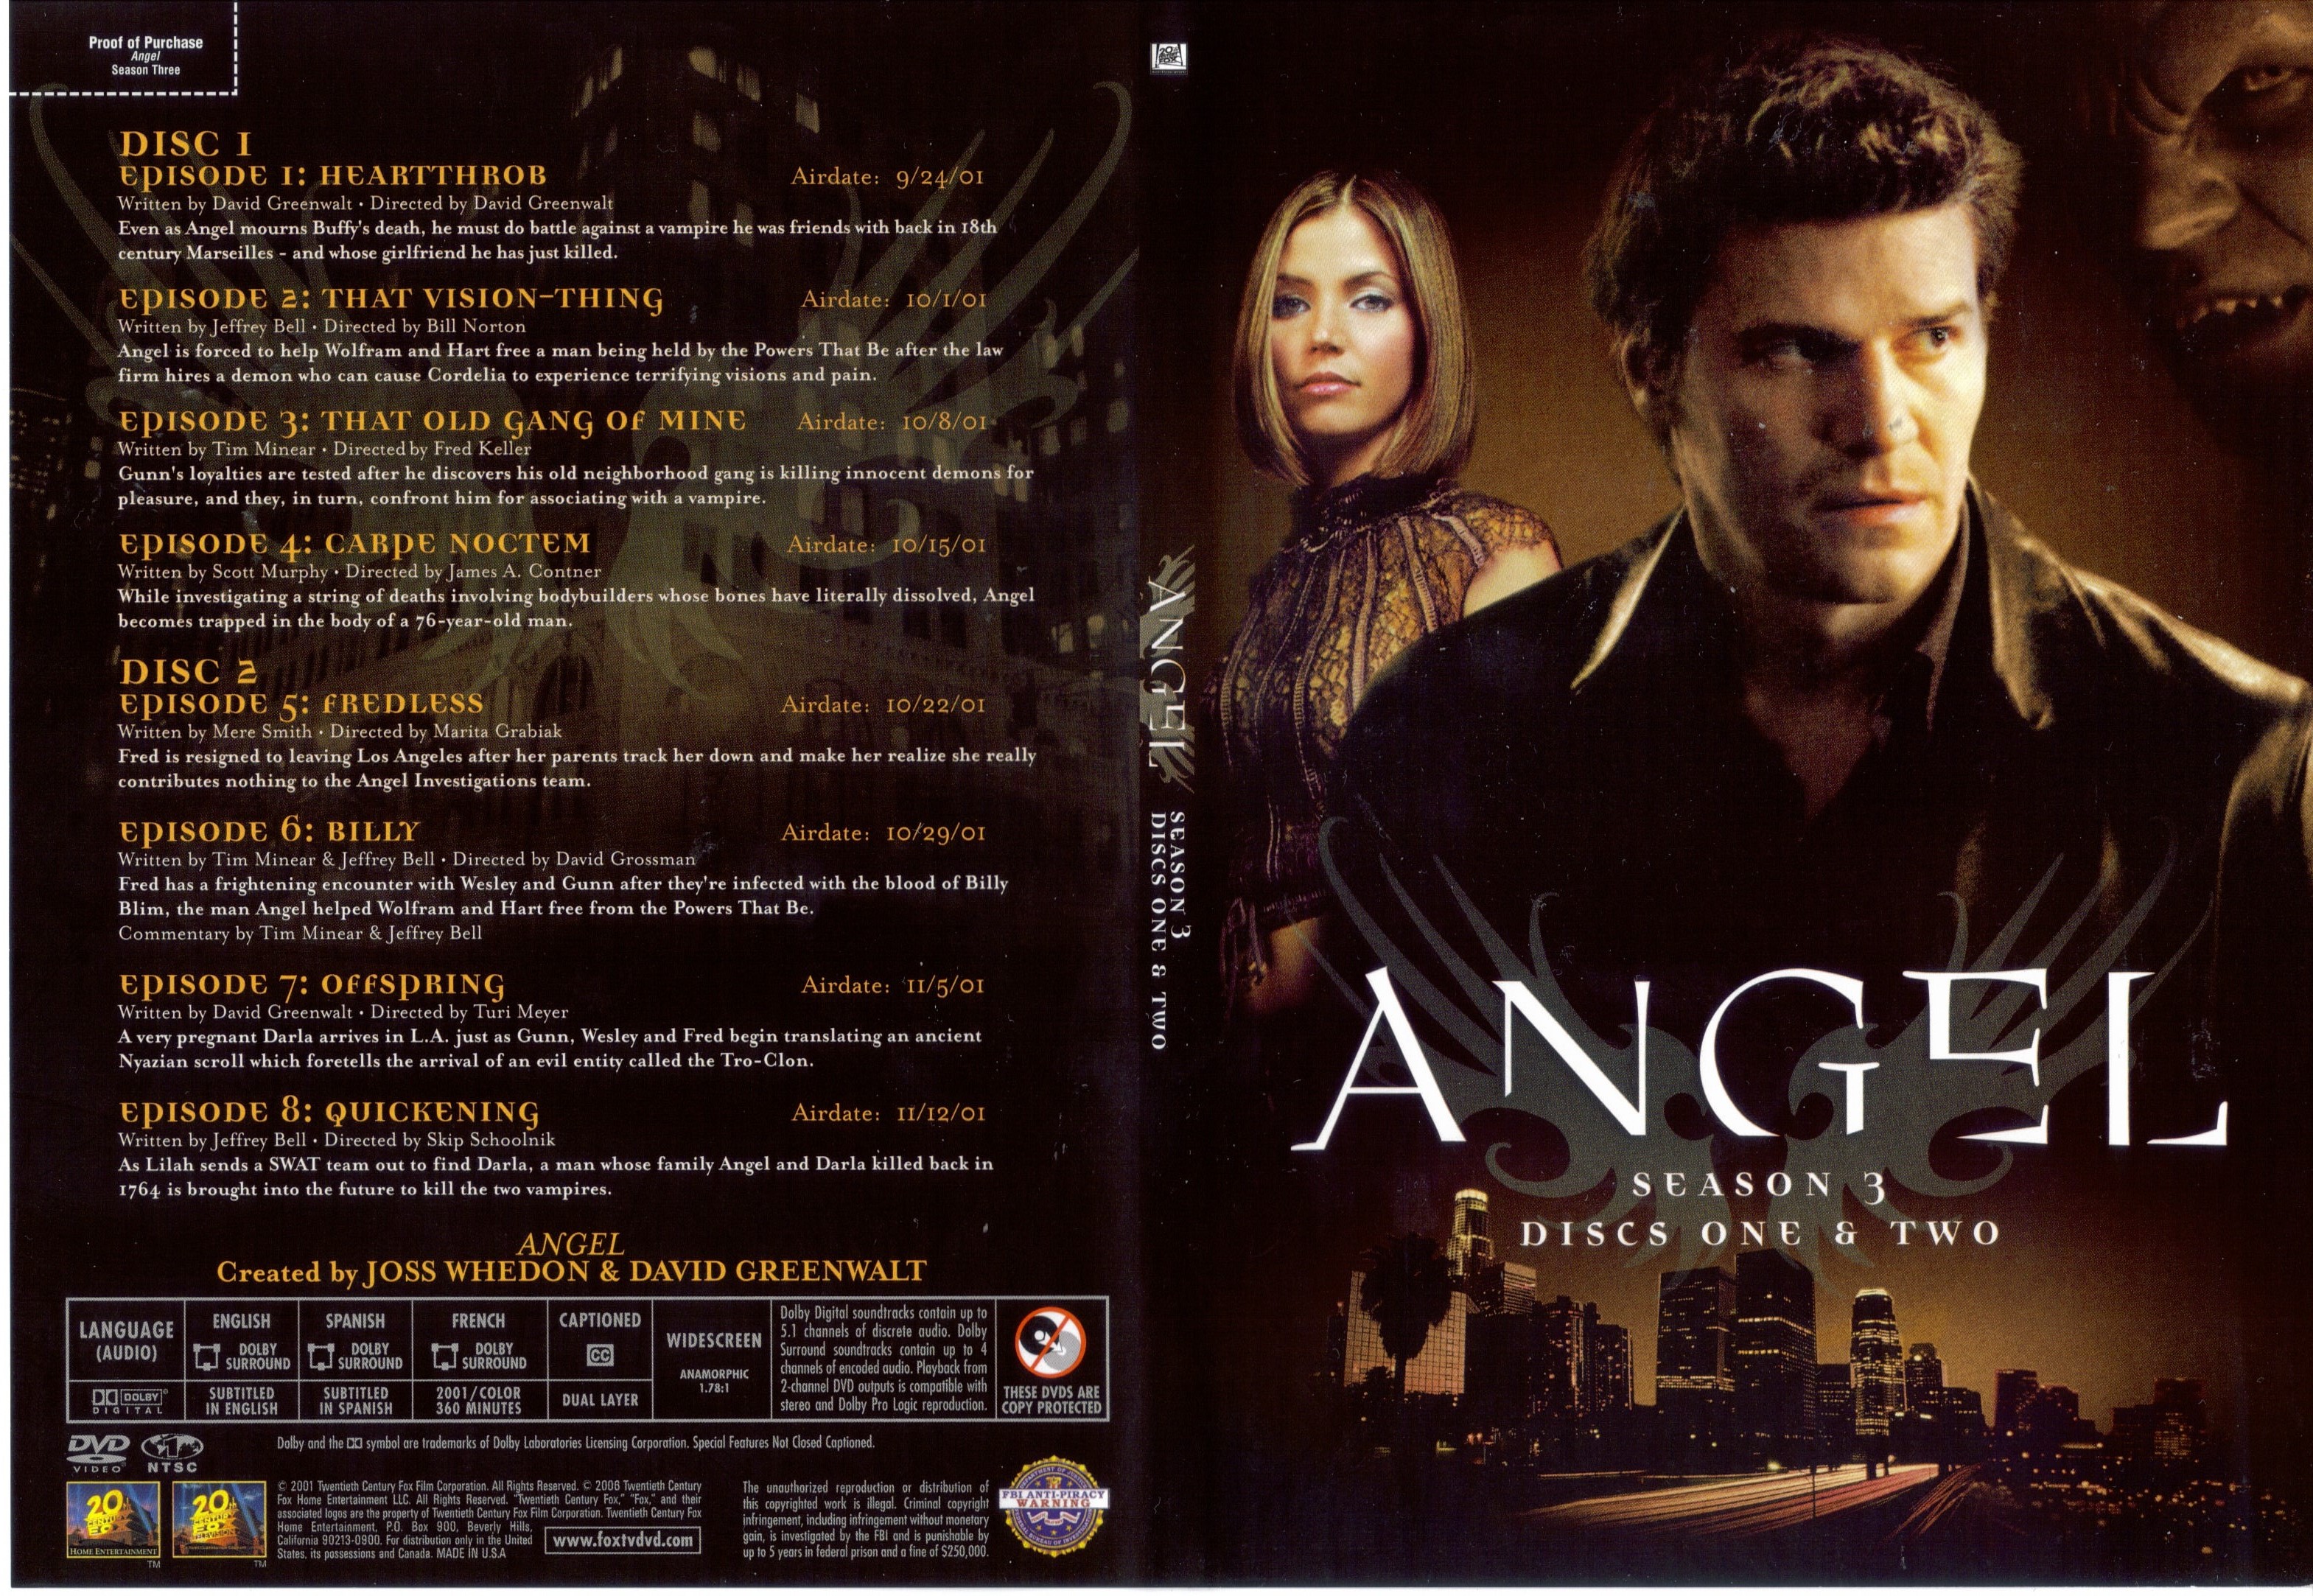 Jaquette DVD Angel Saison 3 DVD 1 (Canadienne)